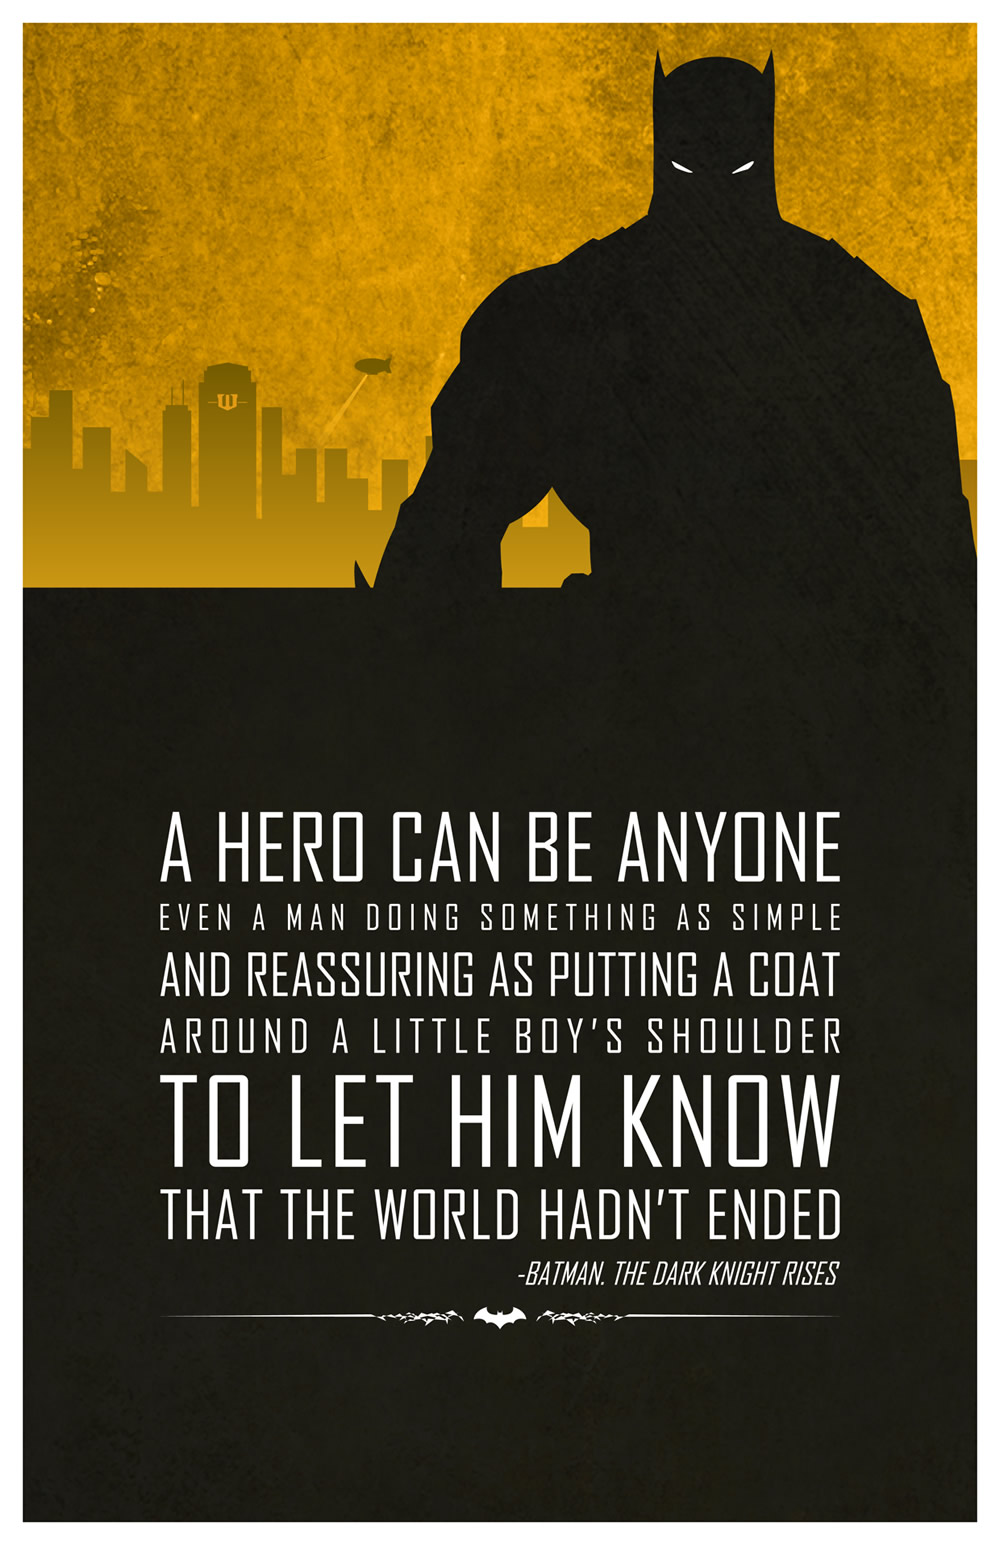 Batman Quotes Inspirational. QuotesGram